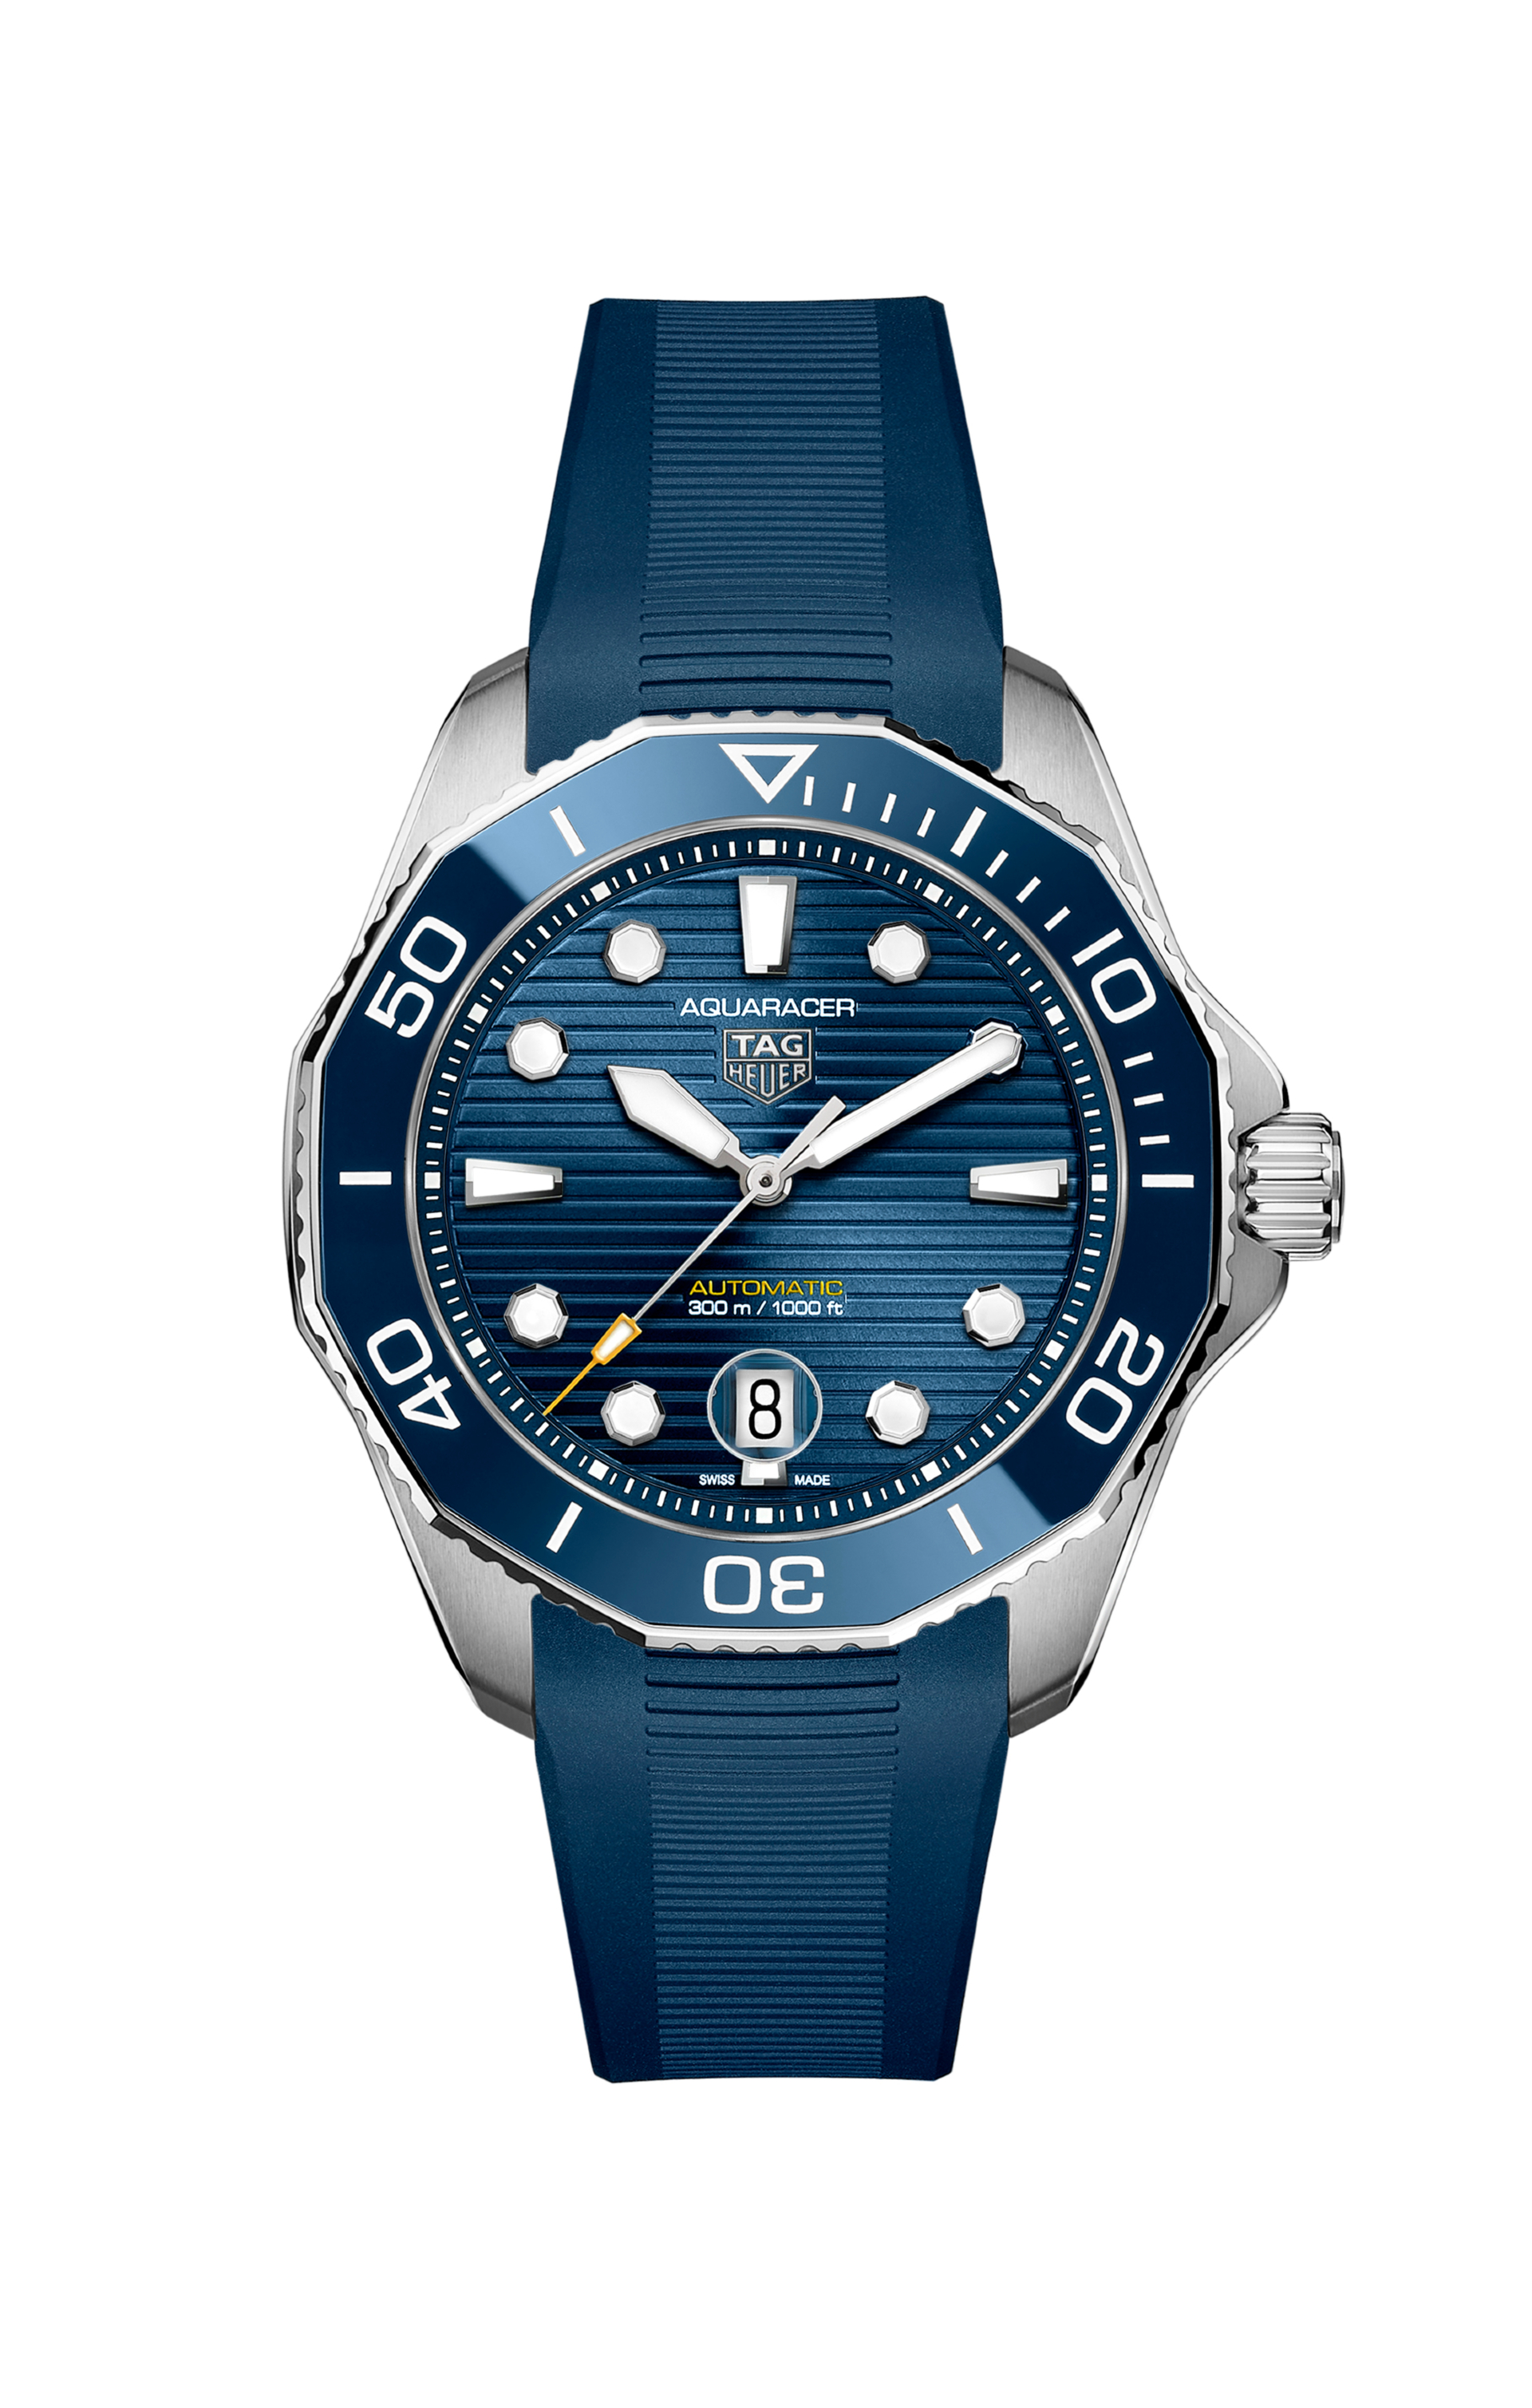 Часы Aquaracer Professional 300 Night Diver, TAG Heuer